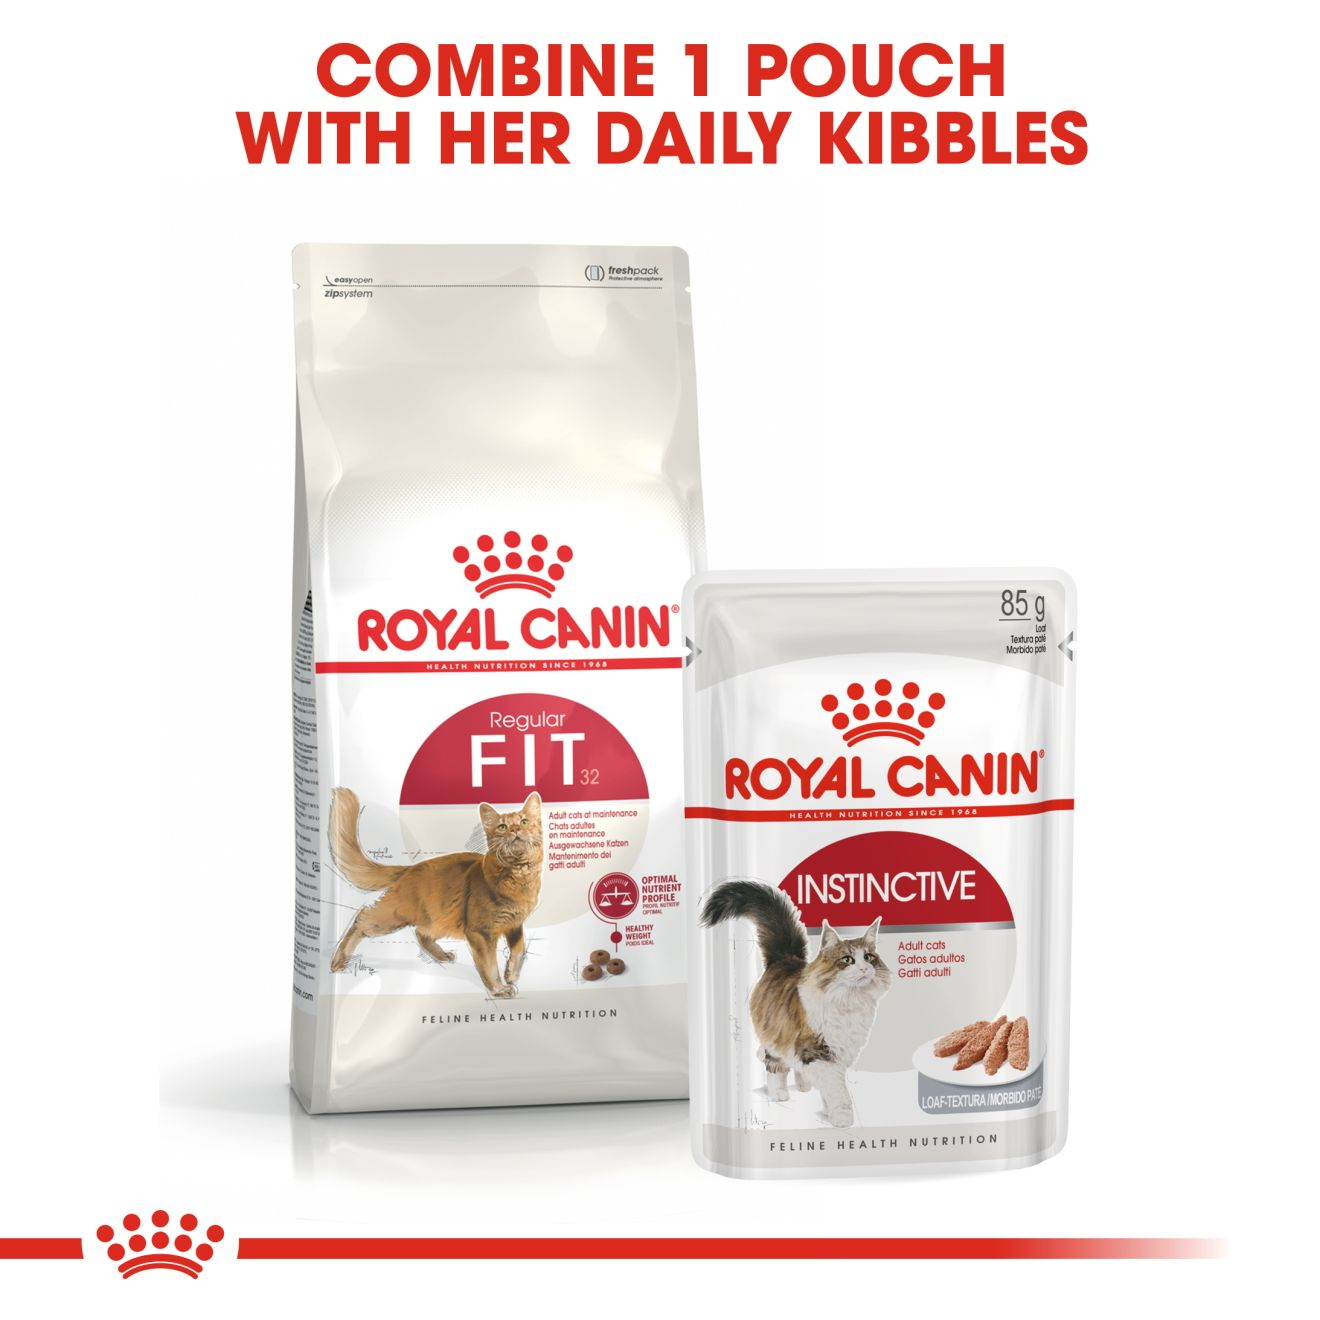 Royal canin Fit 32 2 kg 